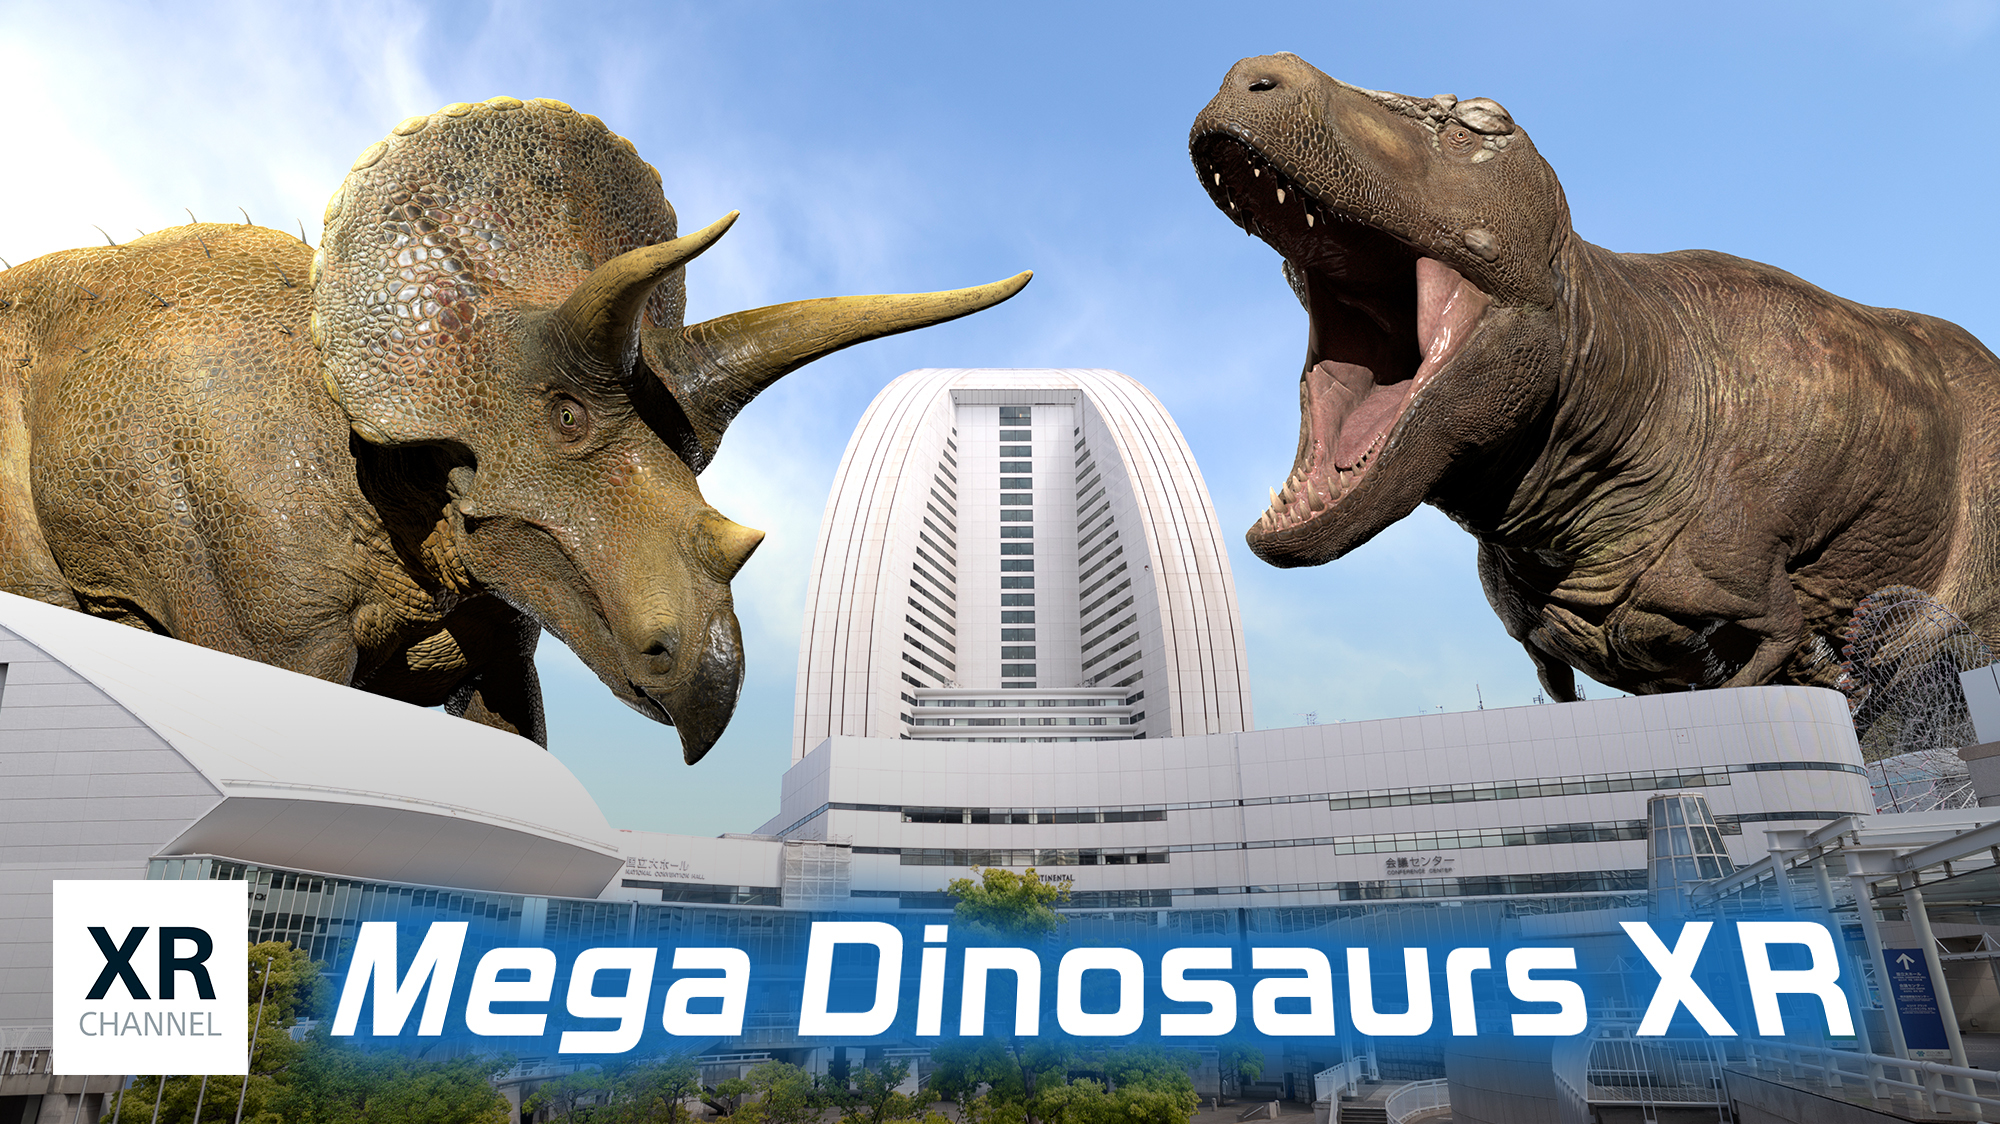 XR CHANNEL Yokohama Mega Dinosaurs XR